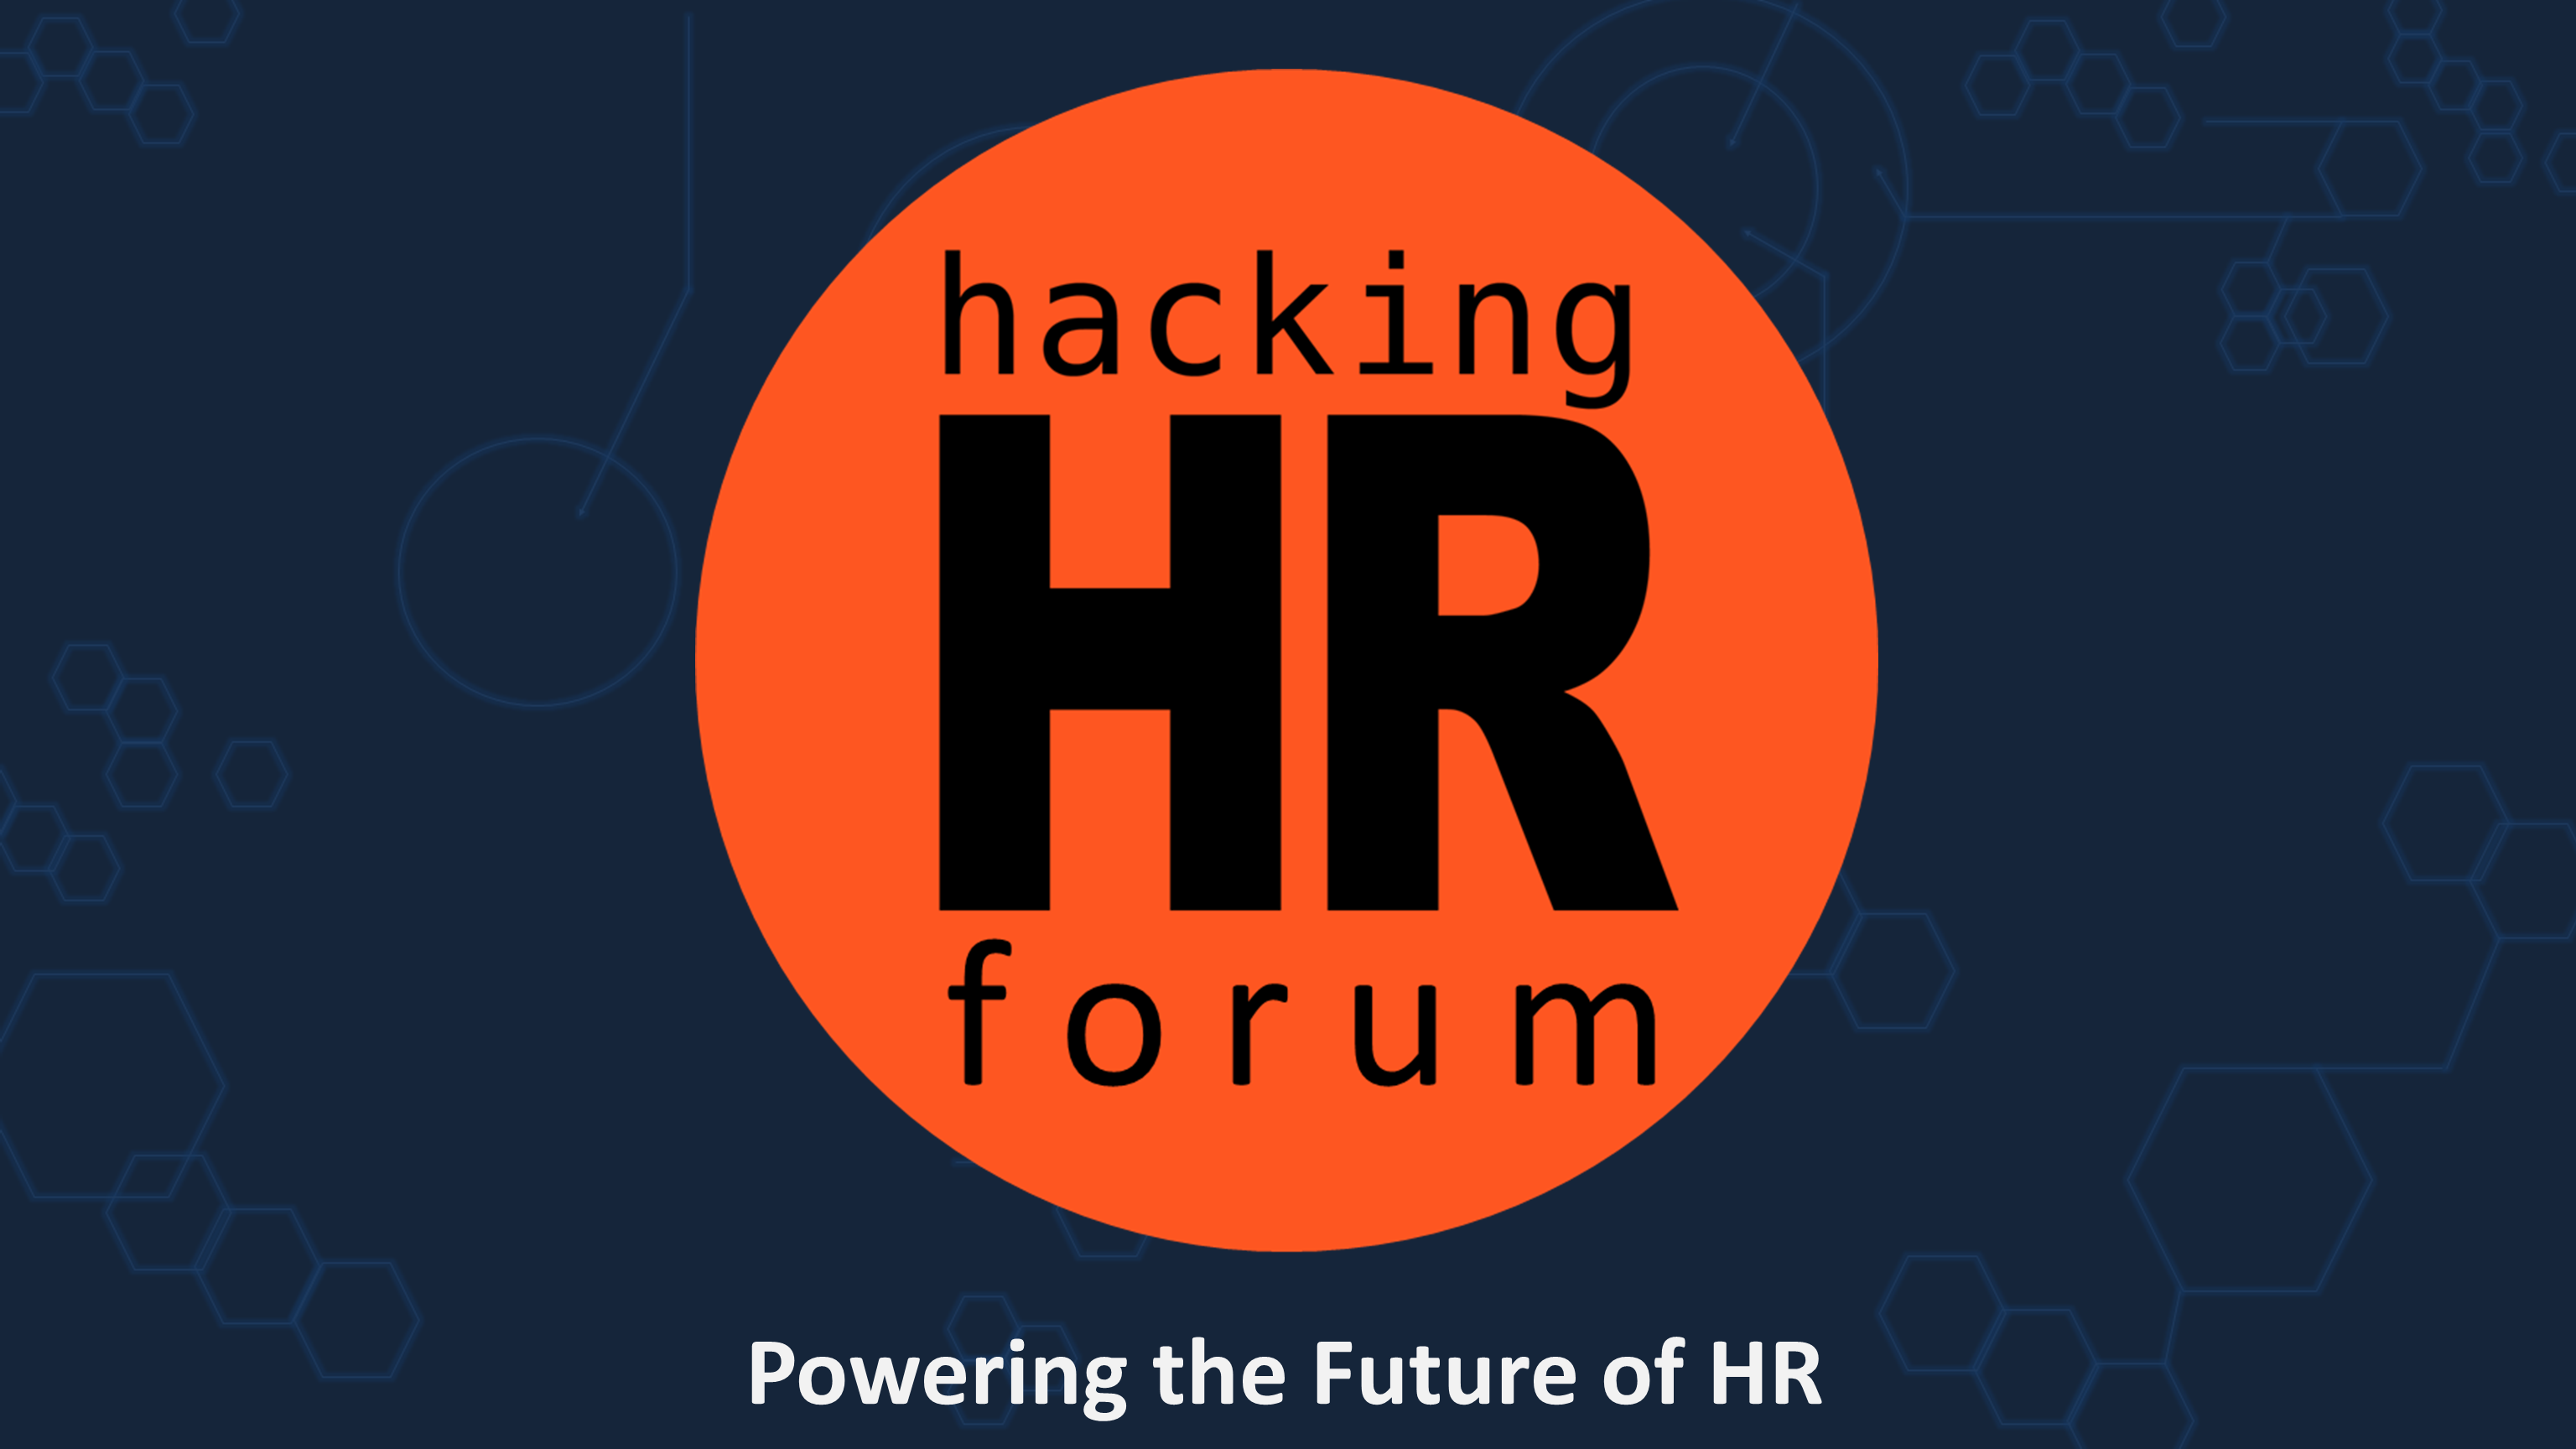 Partnership with Hacking HR Ignite Organizations